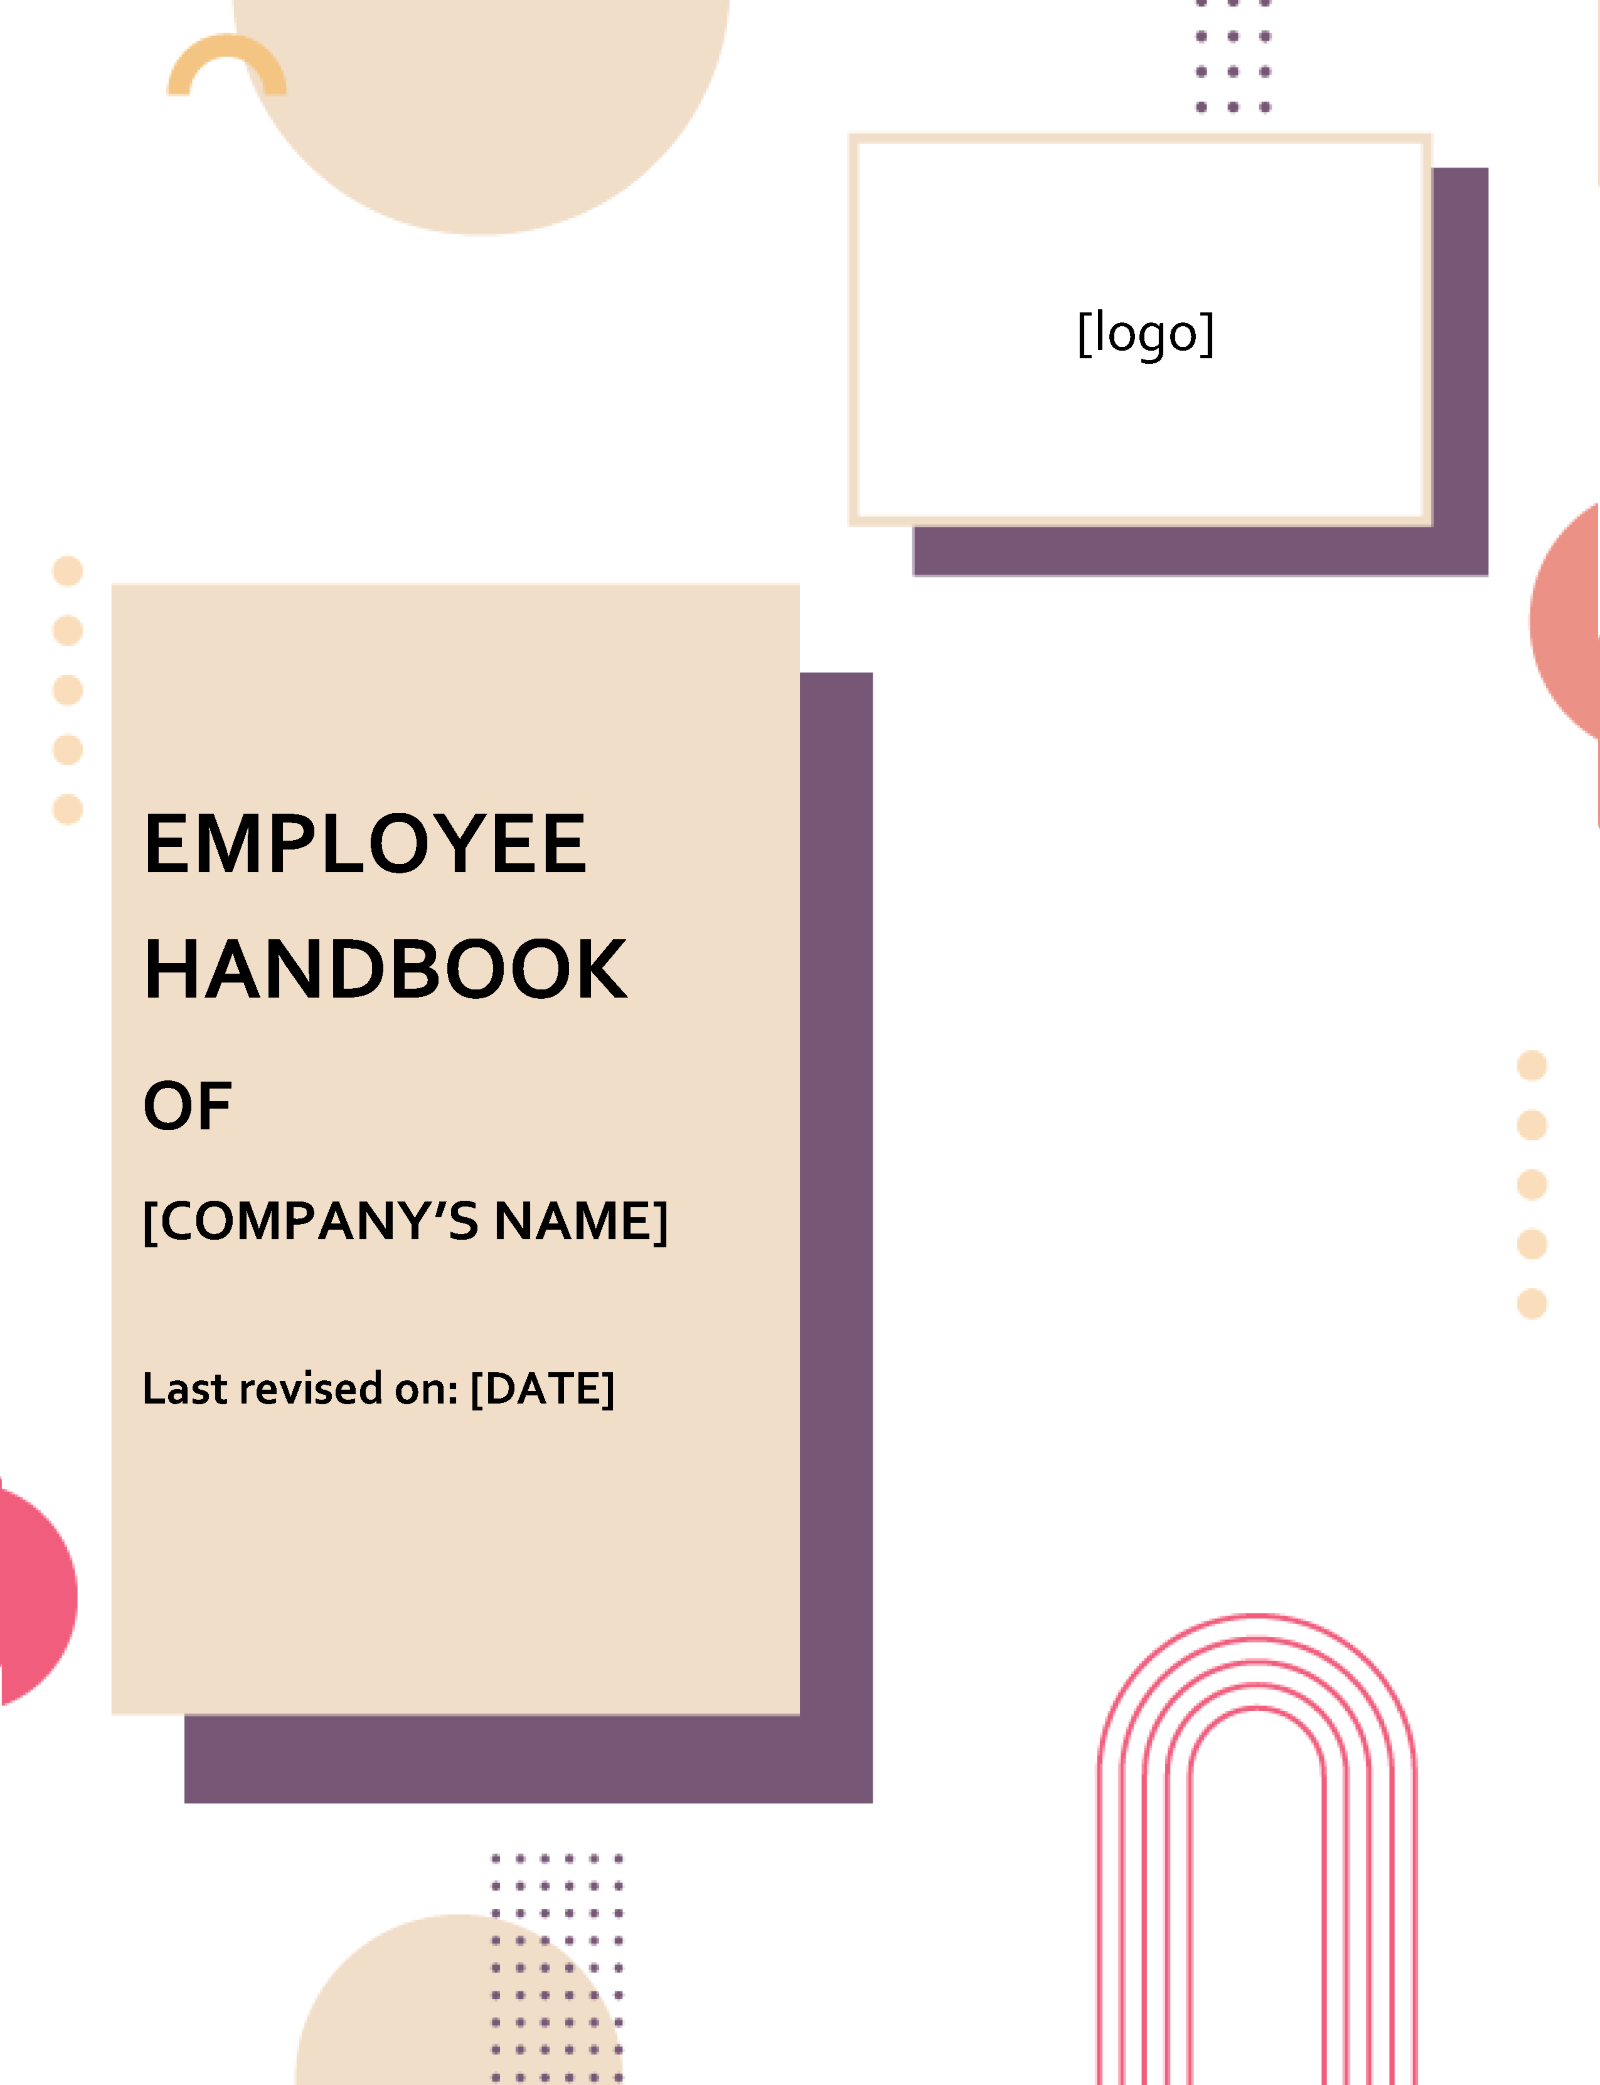 Create Your Employee Handbook